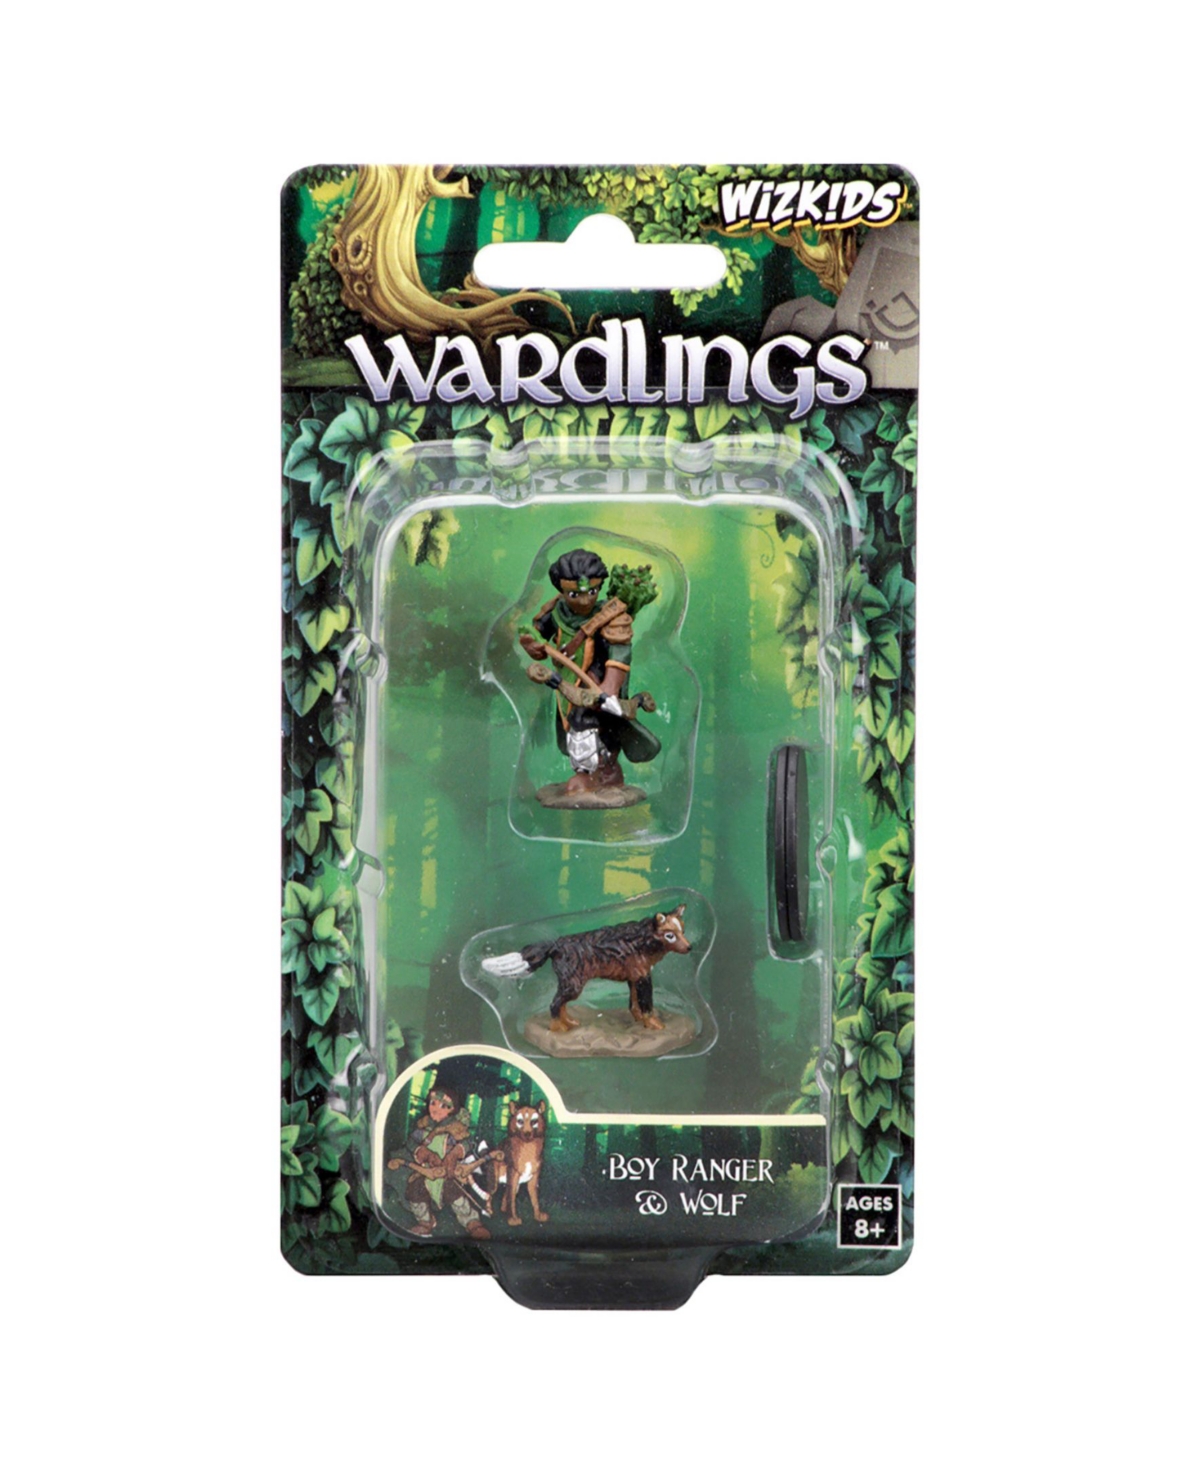 Wizkids Games Wizkids Wardlings Role Playing Games Figures Boy Ranger Wolf Set, 2 Pieces In Multi